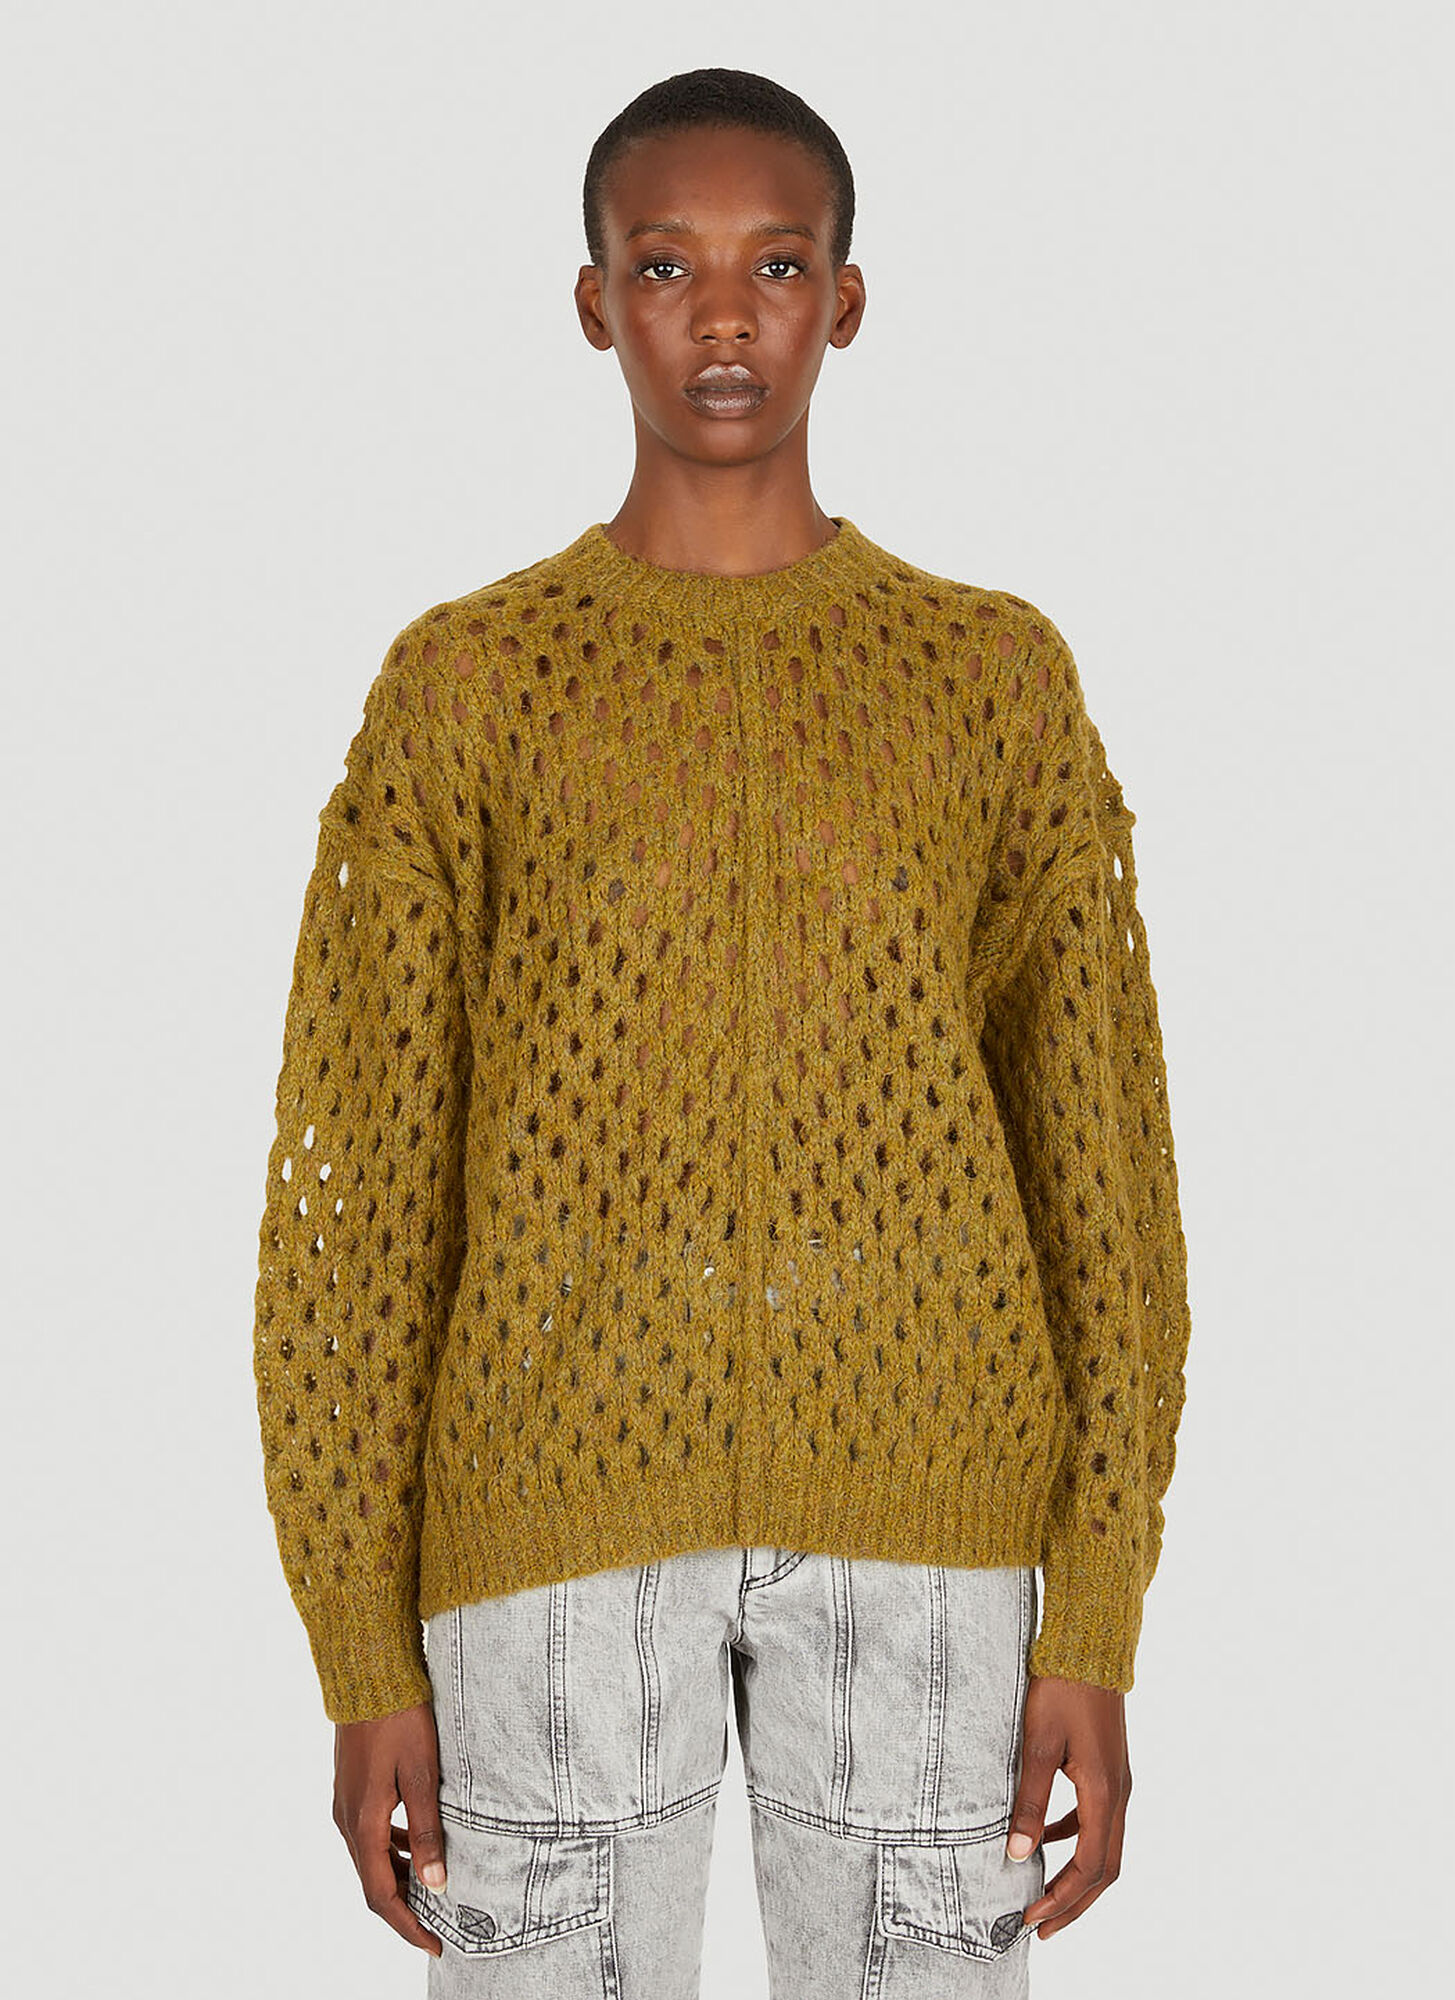 Women's Tiana sweater, MARANT ETOILE